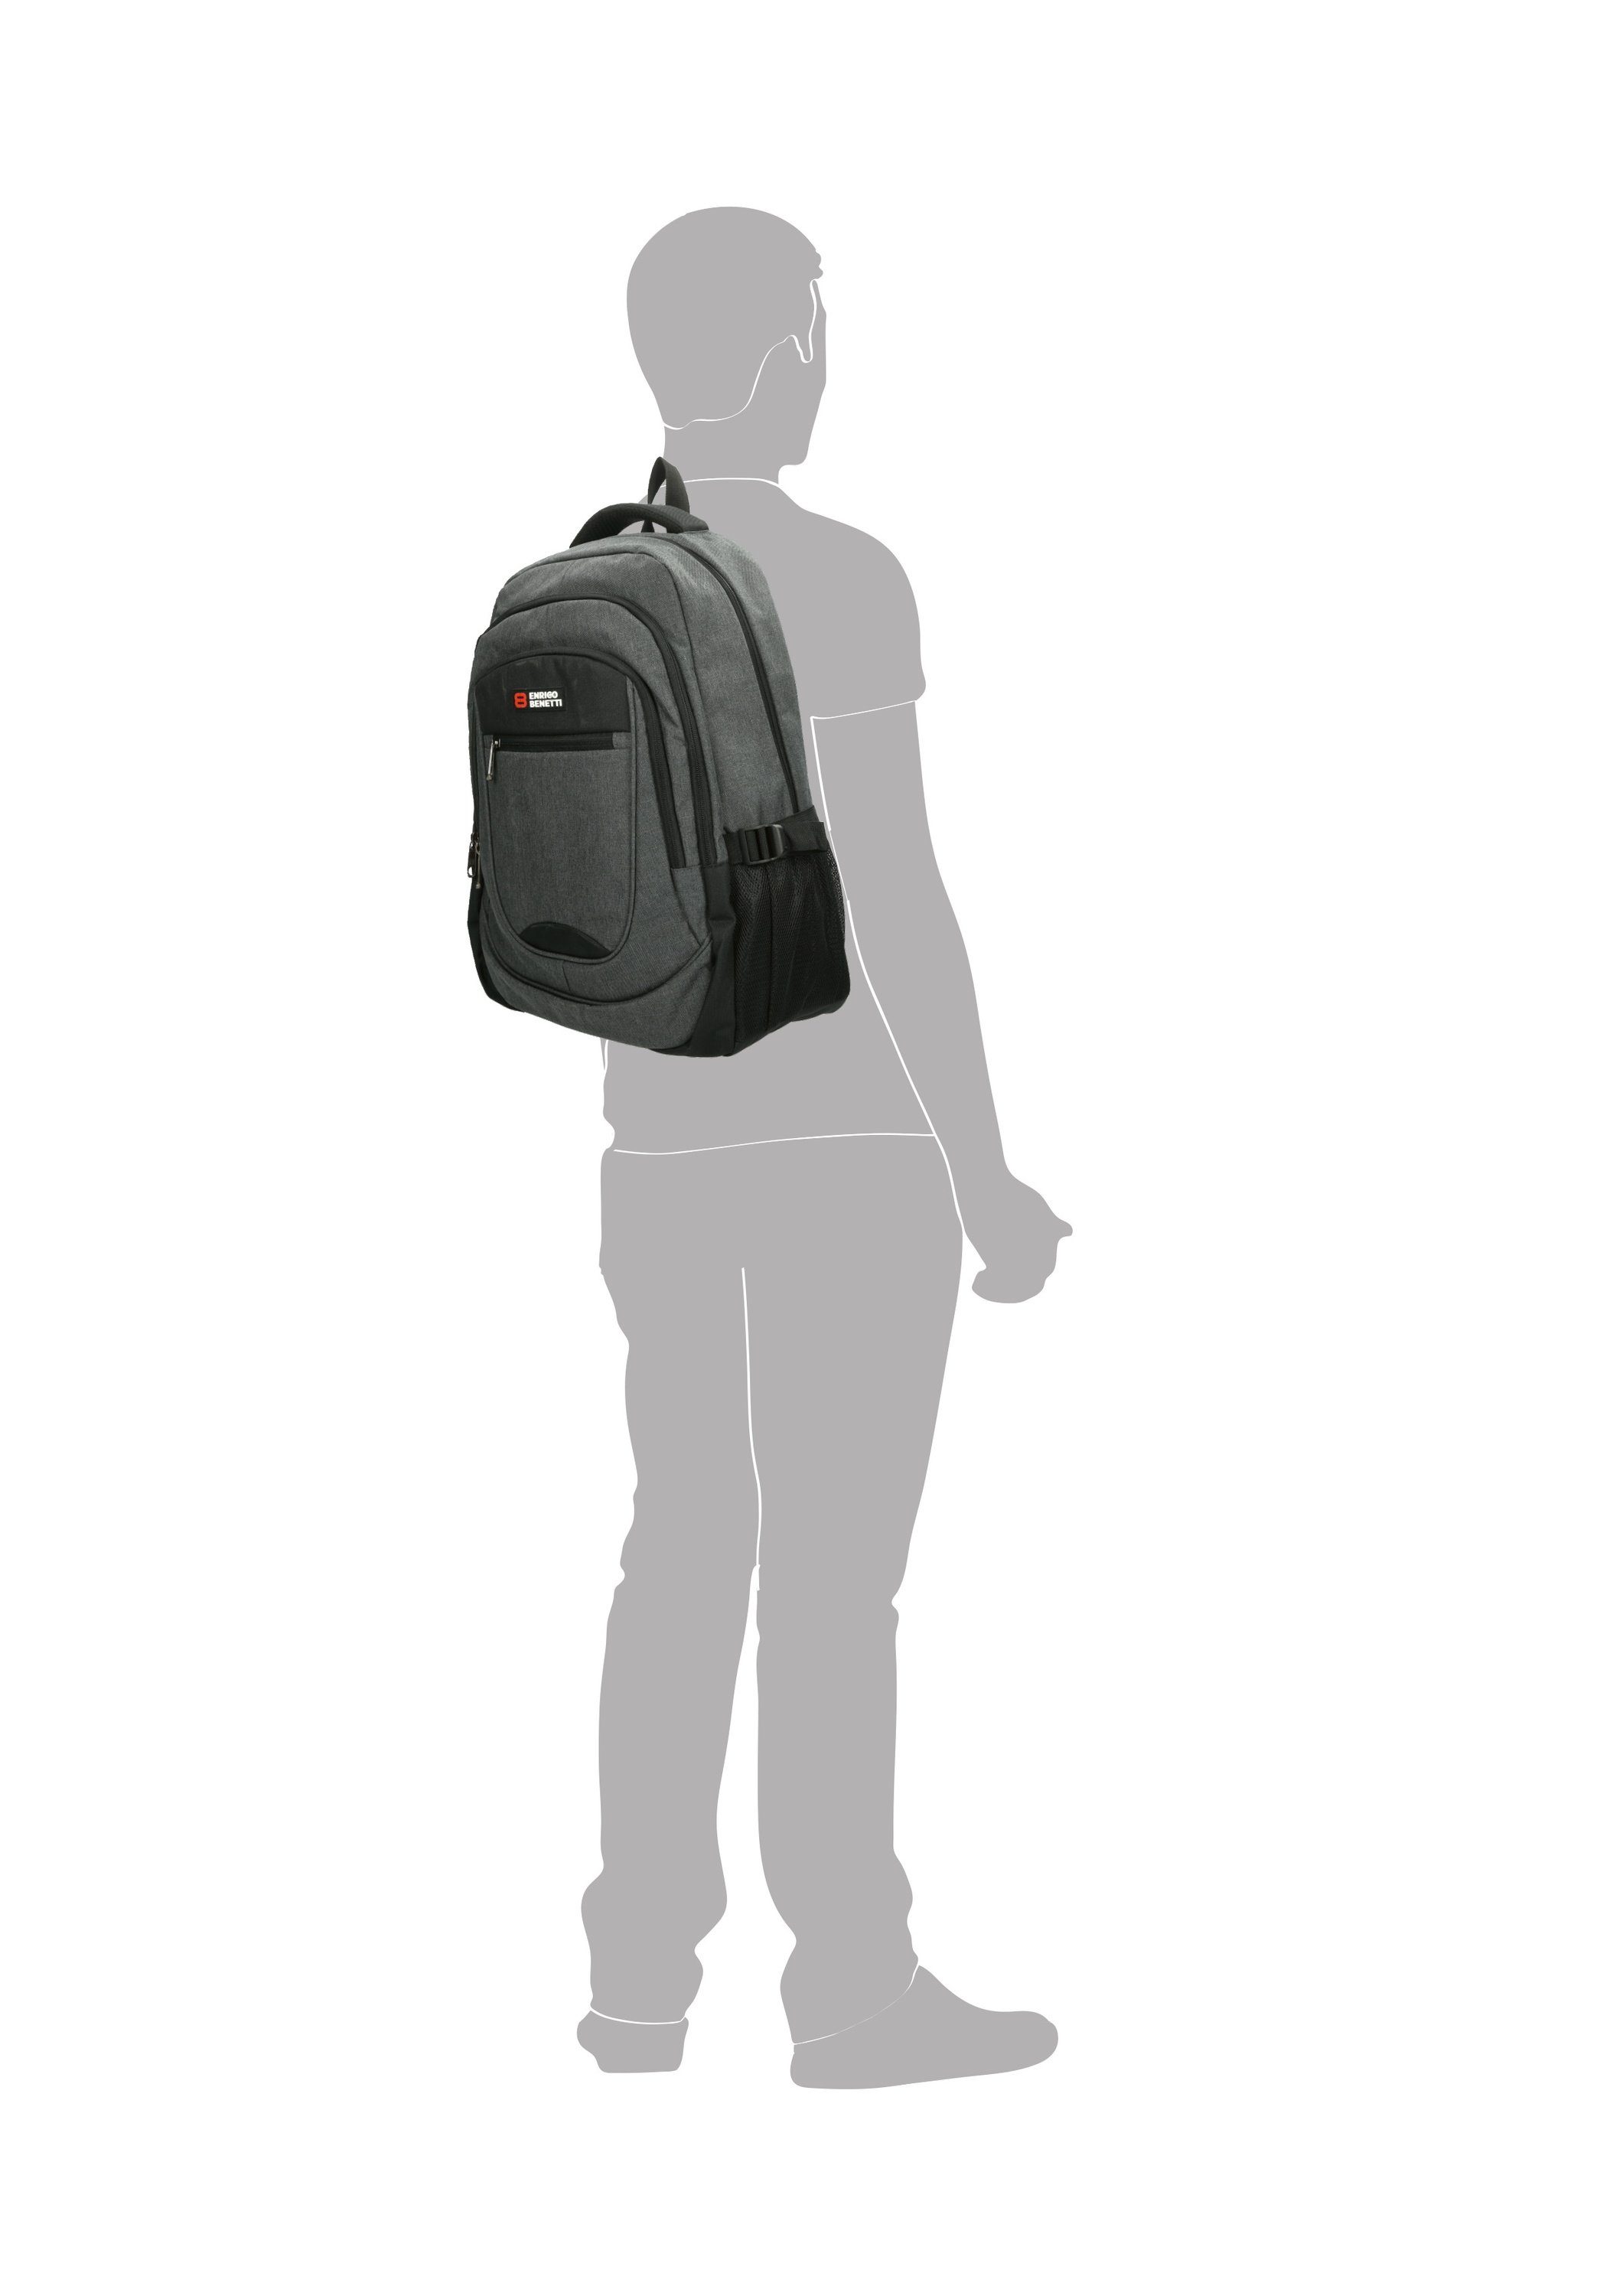 Backpack, Laptoprucksack HTI-Living Grau Notebooktasche Laptoprucksack